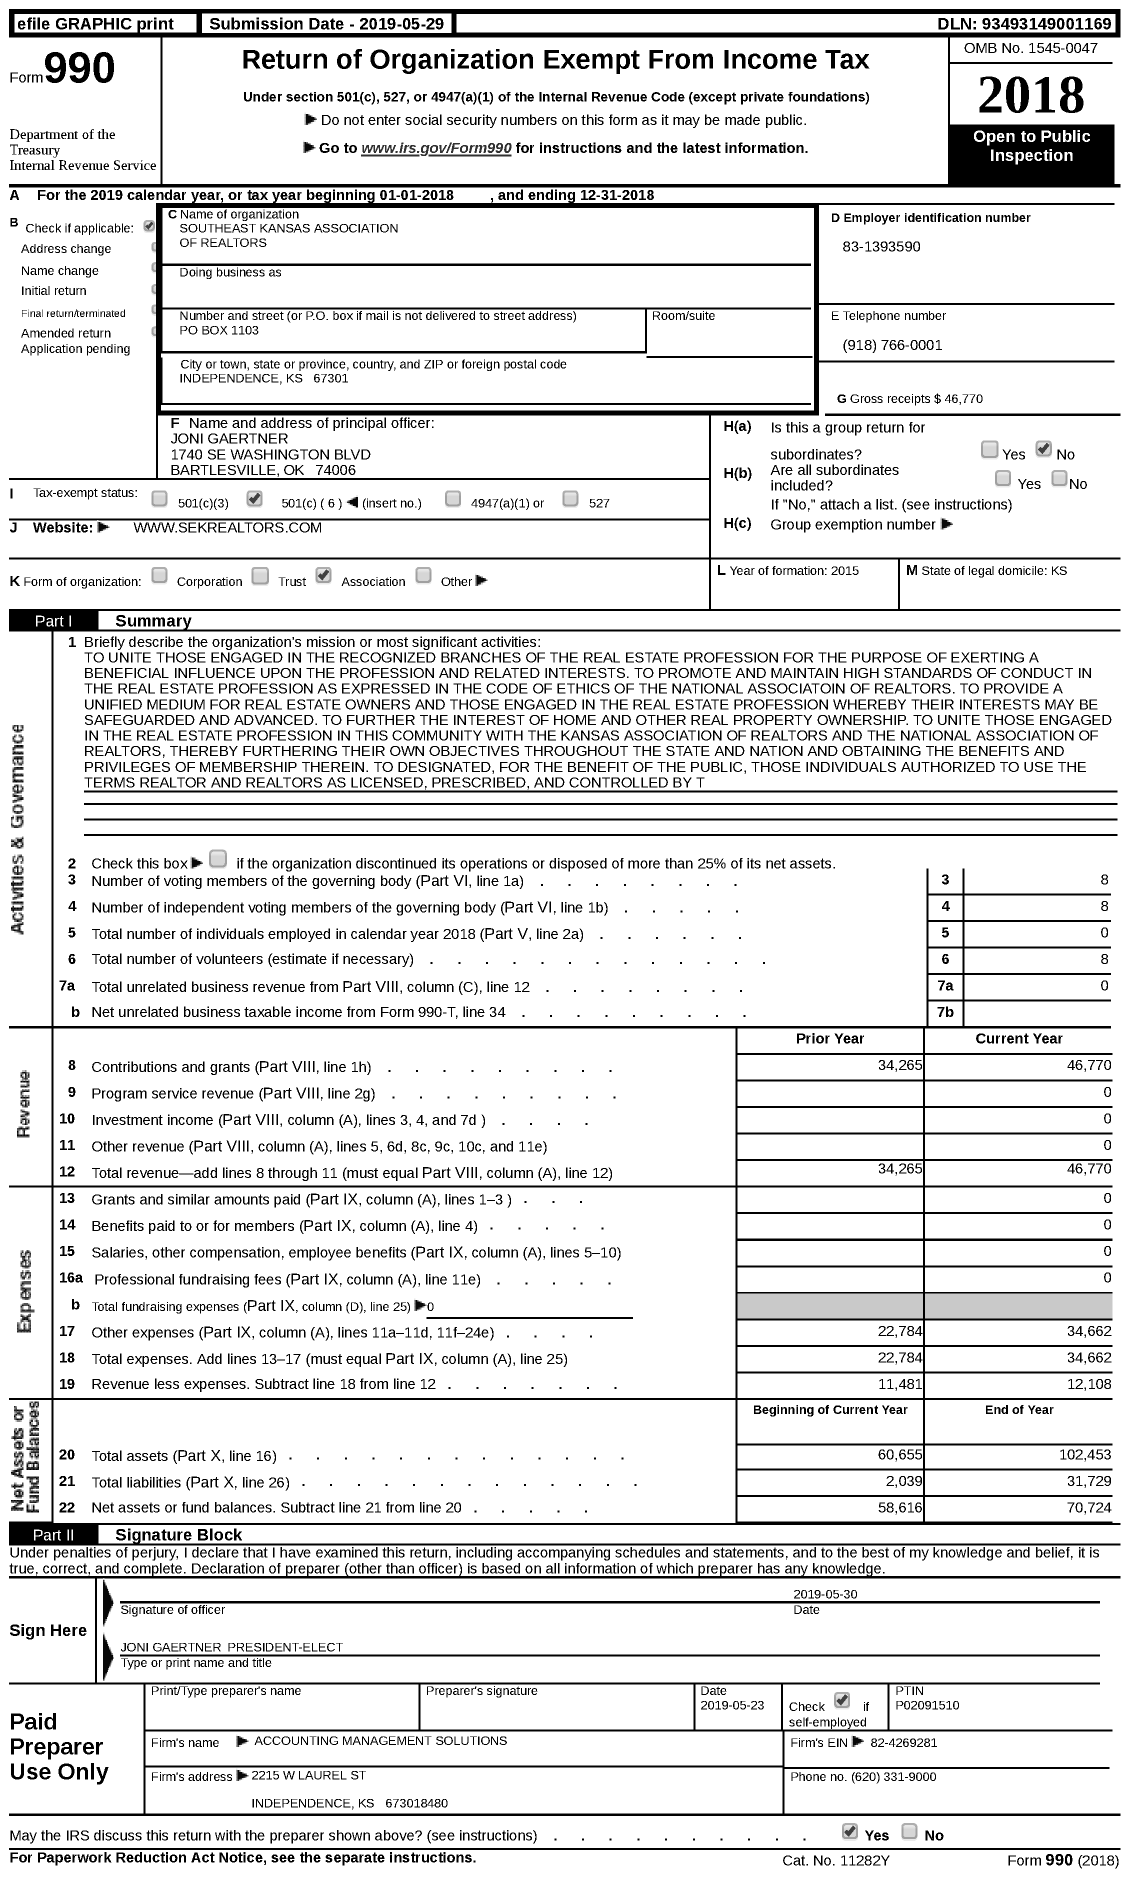 Image of first page of 2018 Form 990 for Southeast Kansas Association of Realtors (SEKAR)